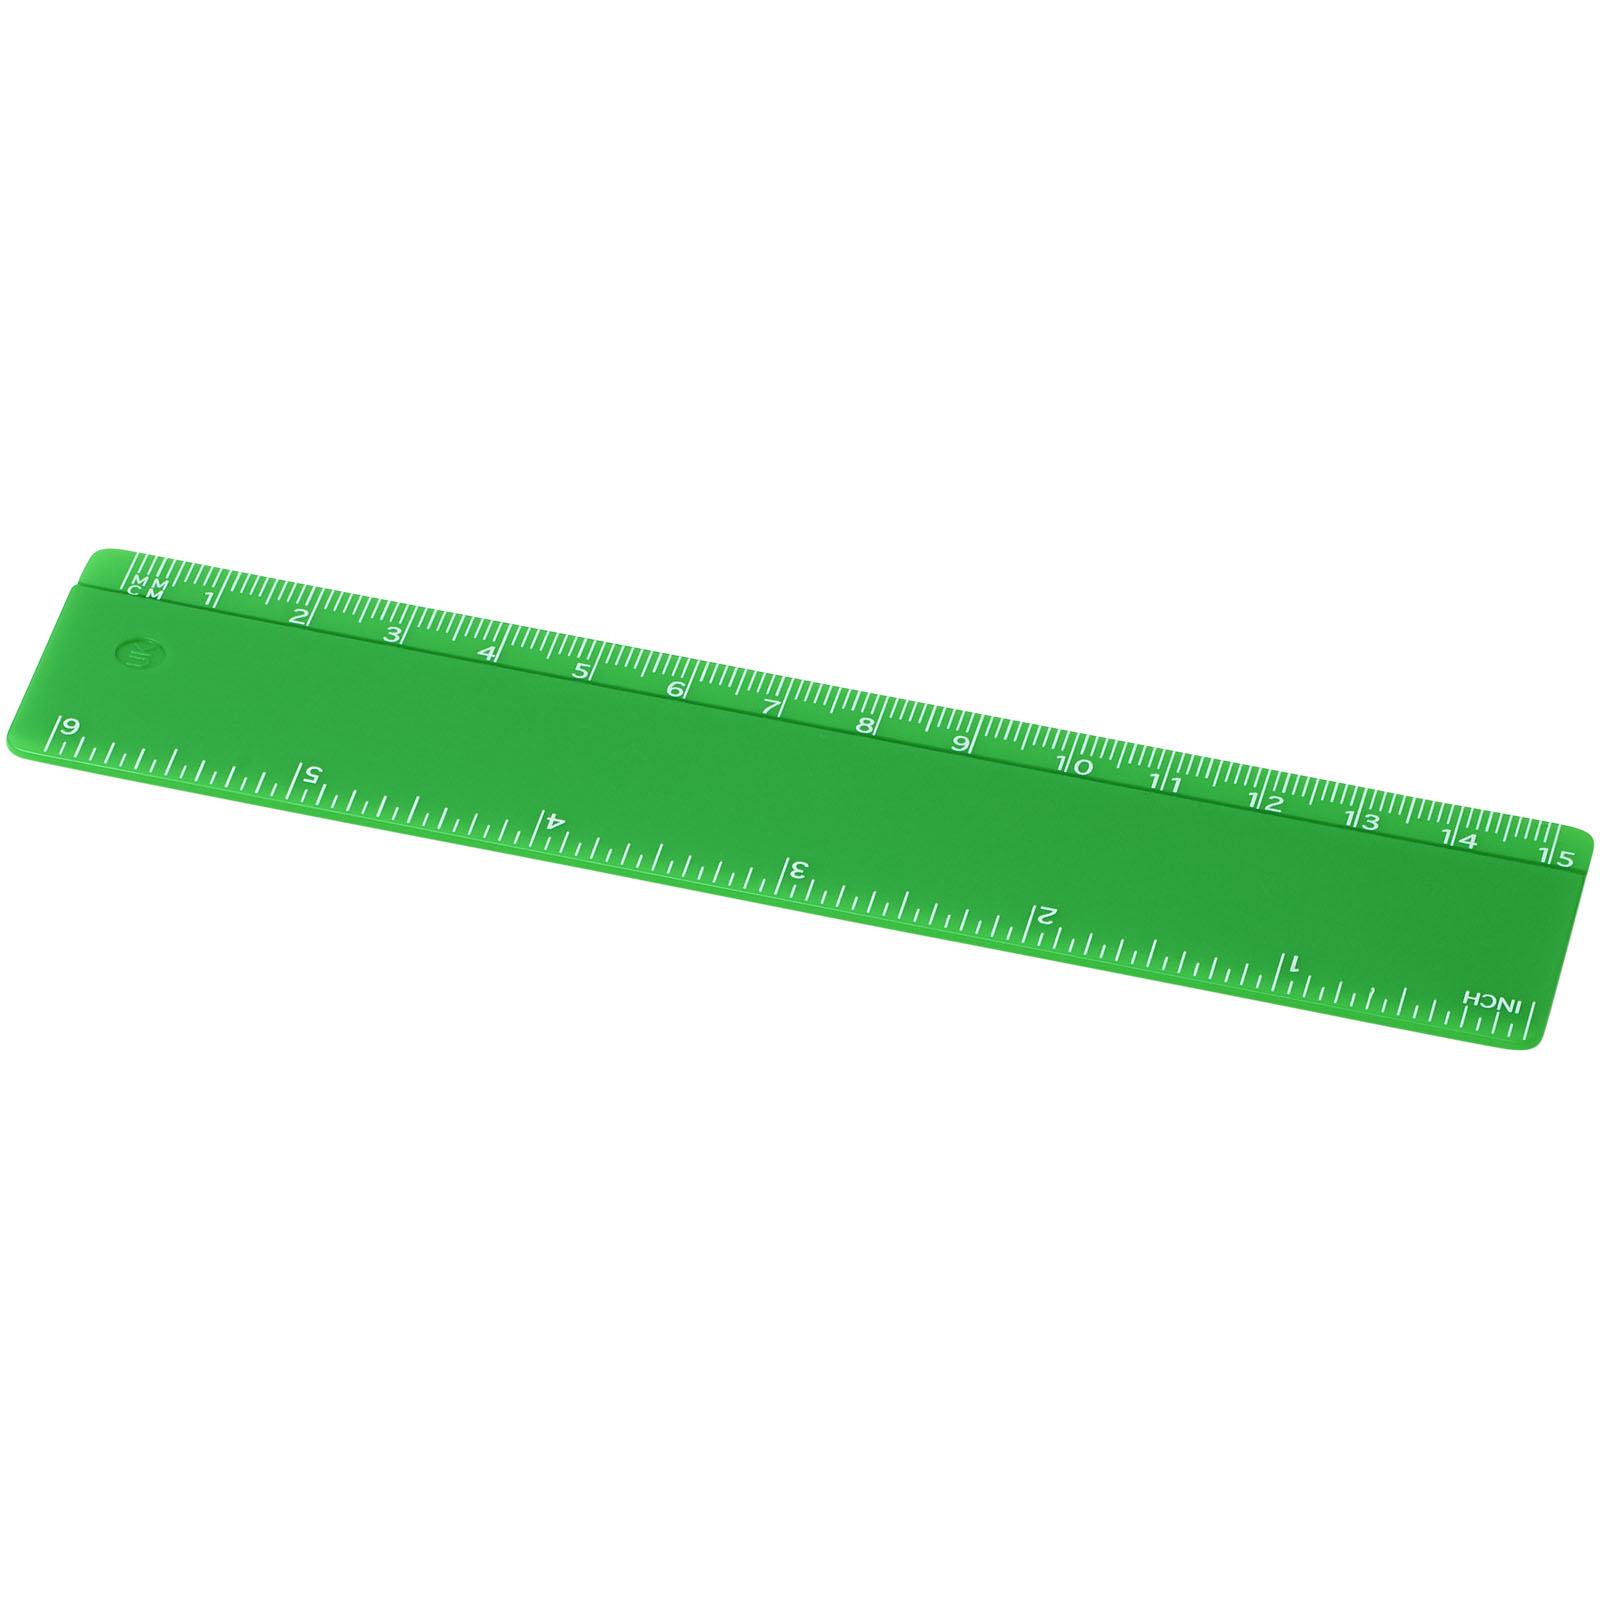 Ruler REGANTO made of recycled plastic, 15 cm